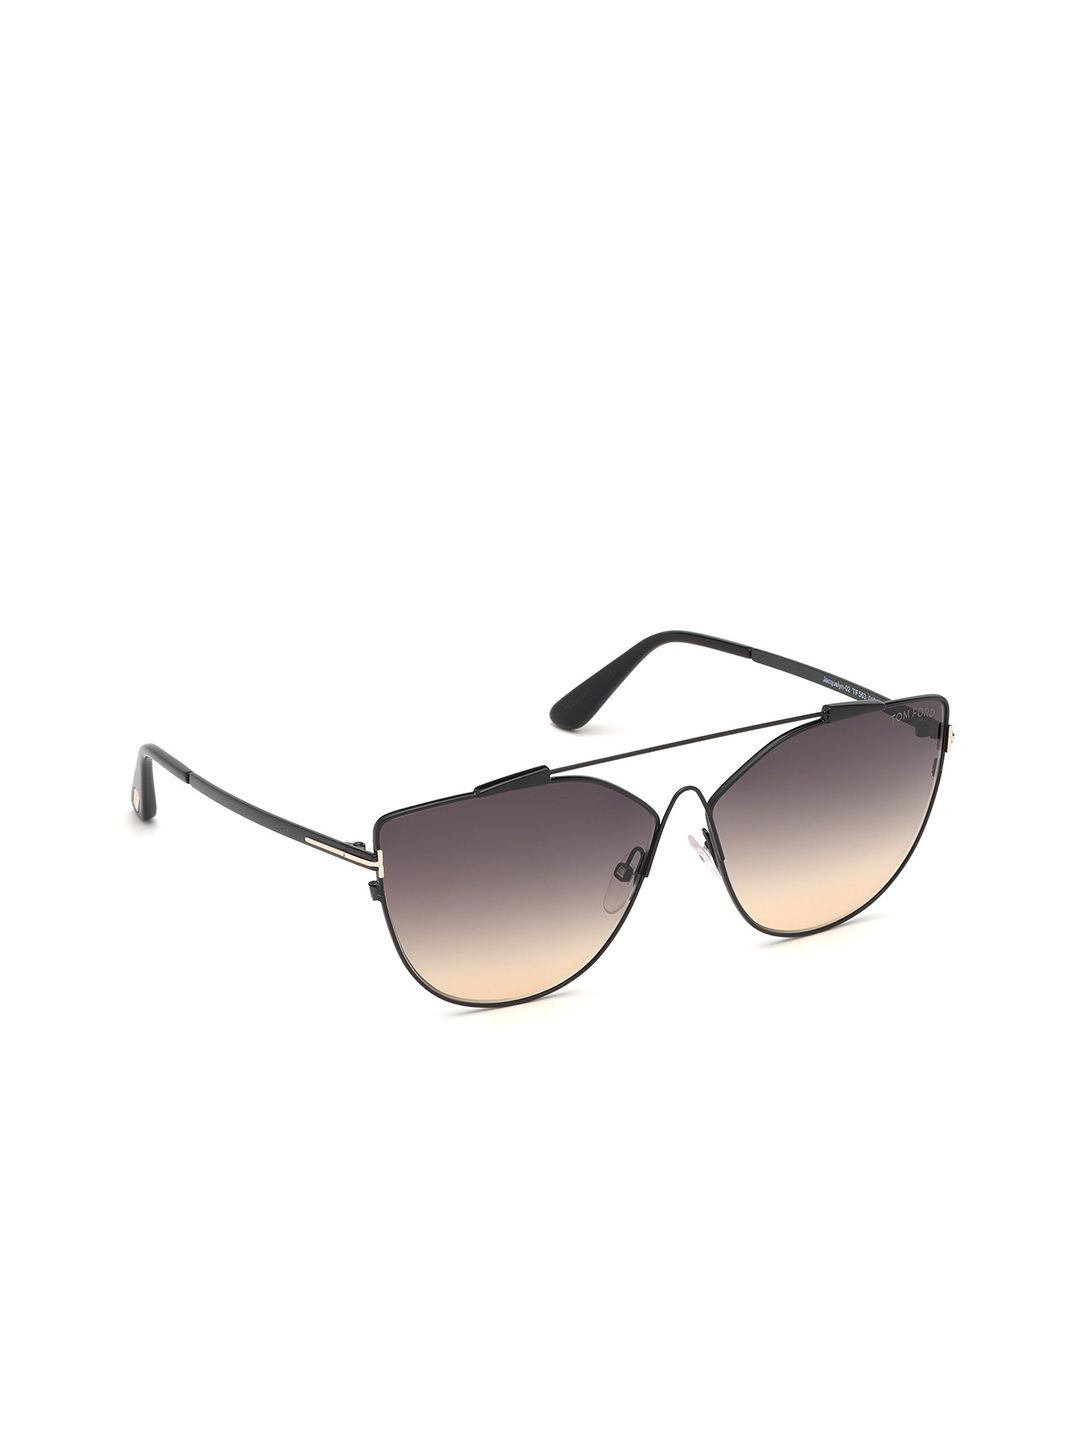 Tom Ford Women Grey Lens & Black Aviator Sunglasses FT0563 64 01B Price in India